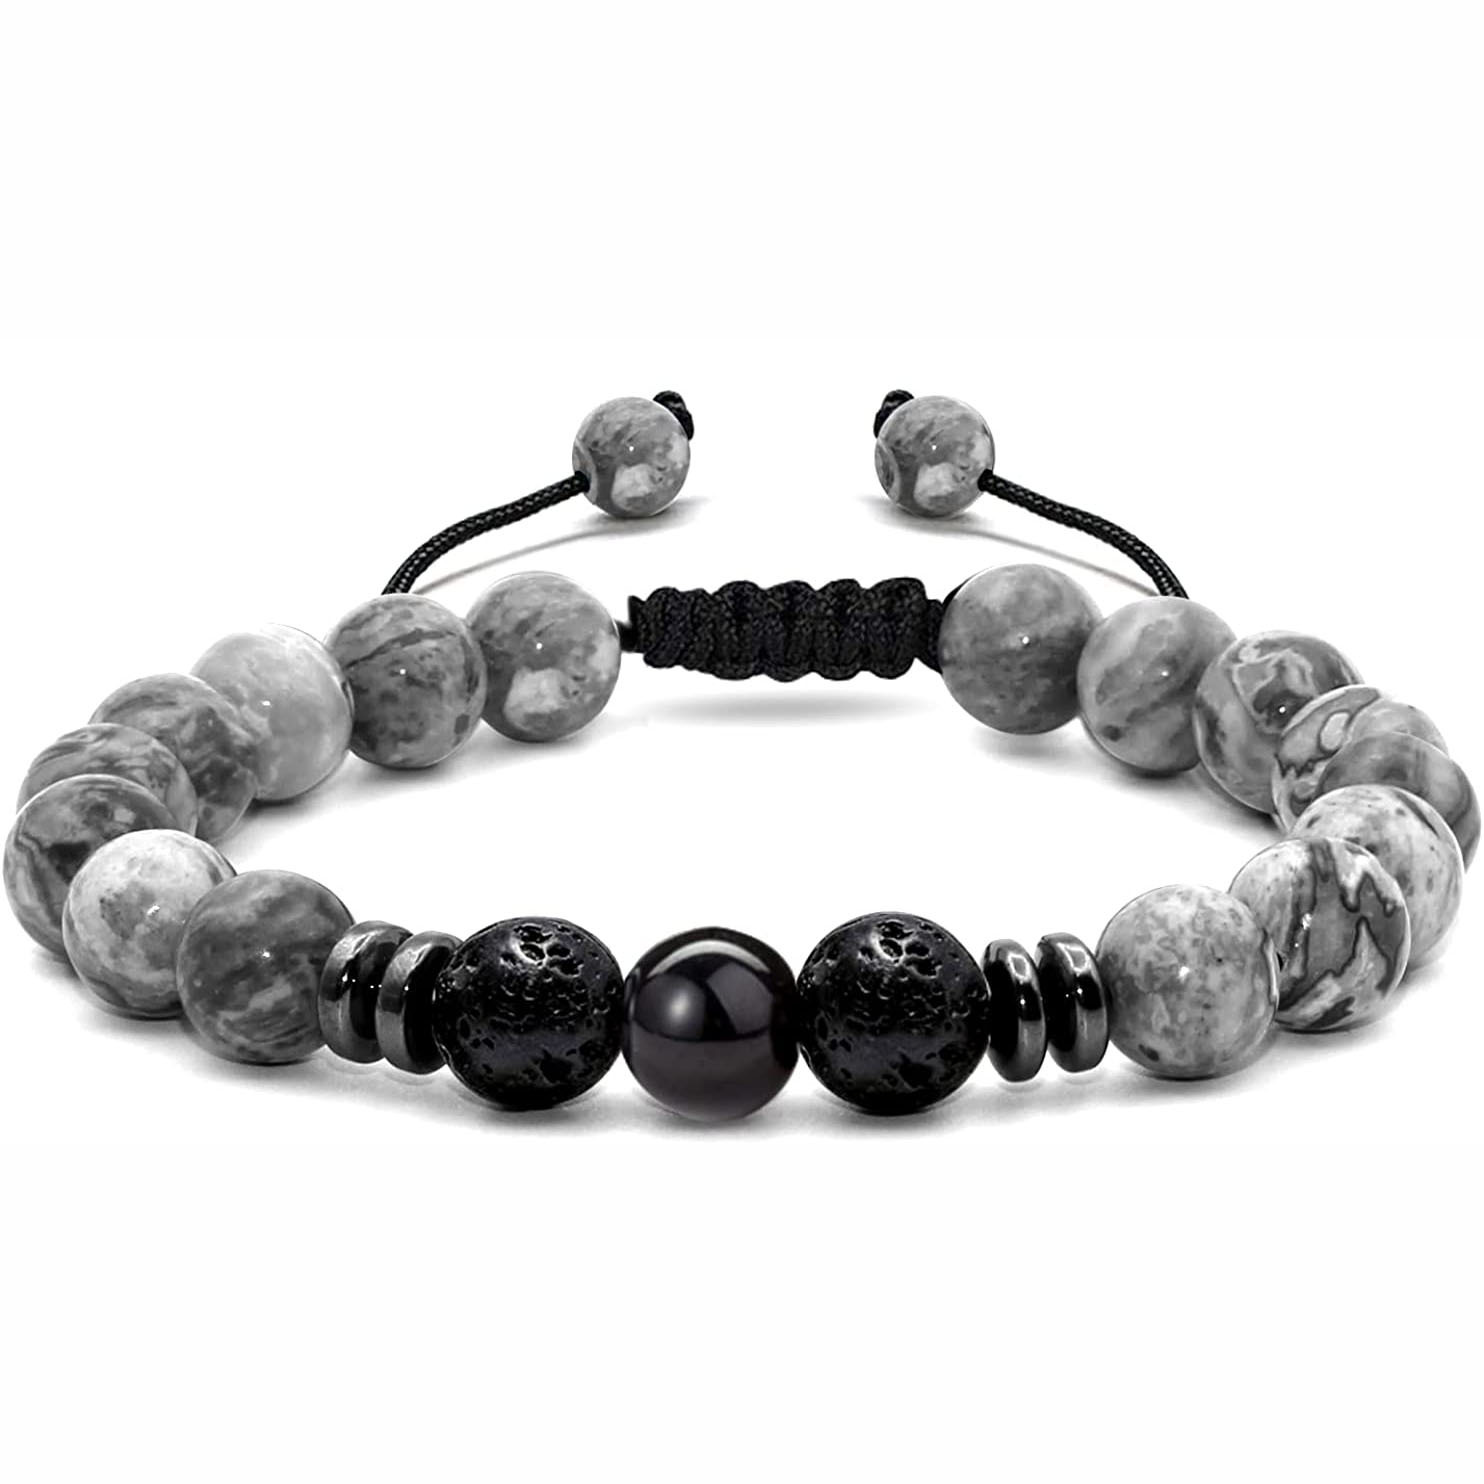 2:Gray stone bracelet